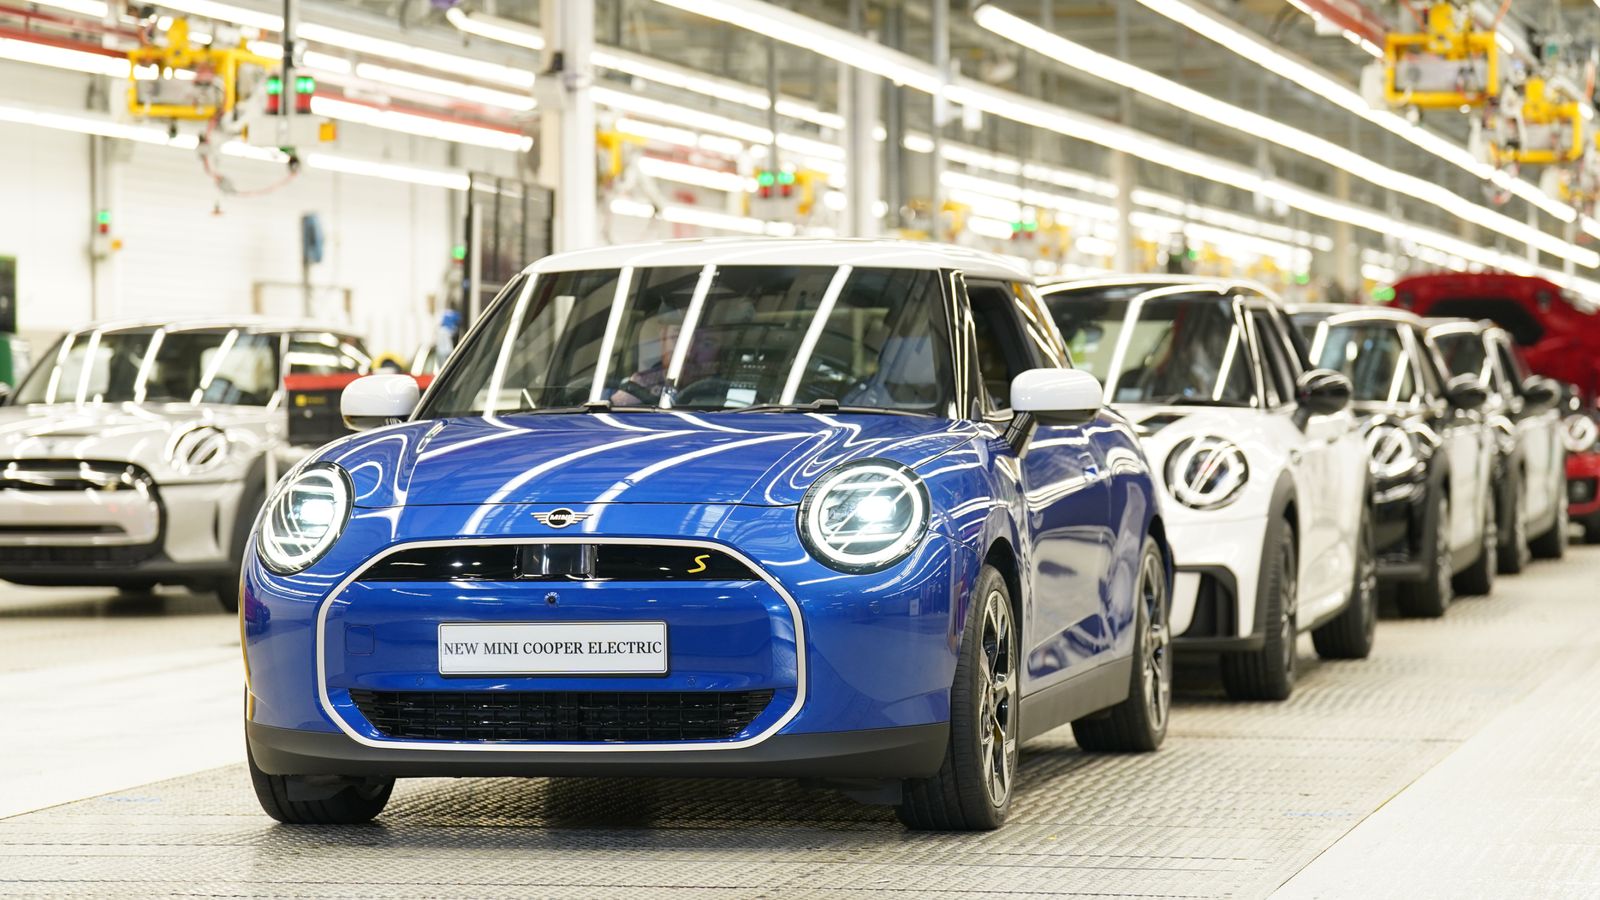 BMW 'optimistic' UK-EU vehicle export tariff rules will be eased